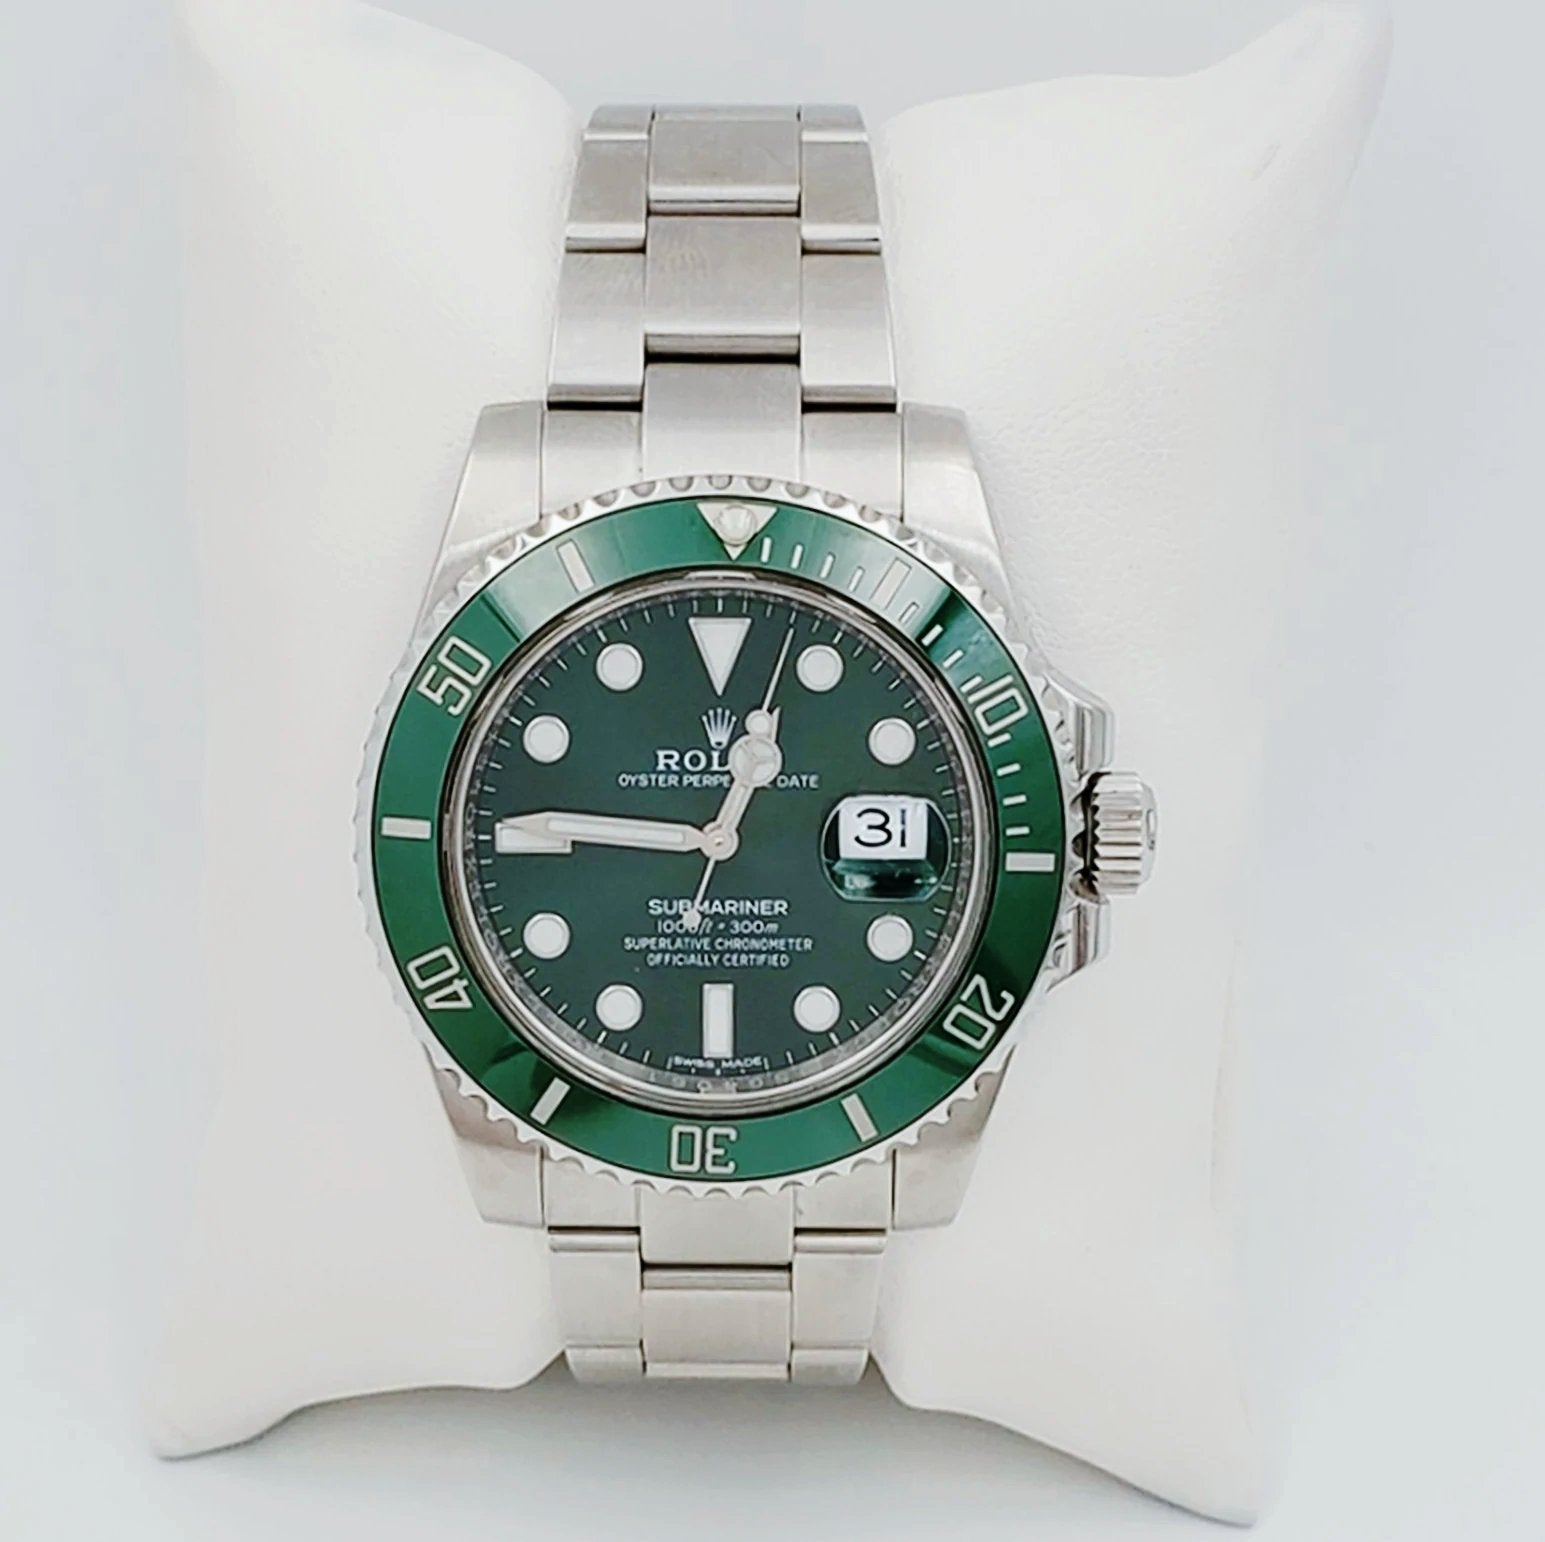 Rolex Submariner Date, Green Dial, Green Bezel, Steel, 116610LV